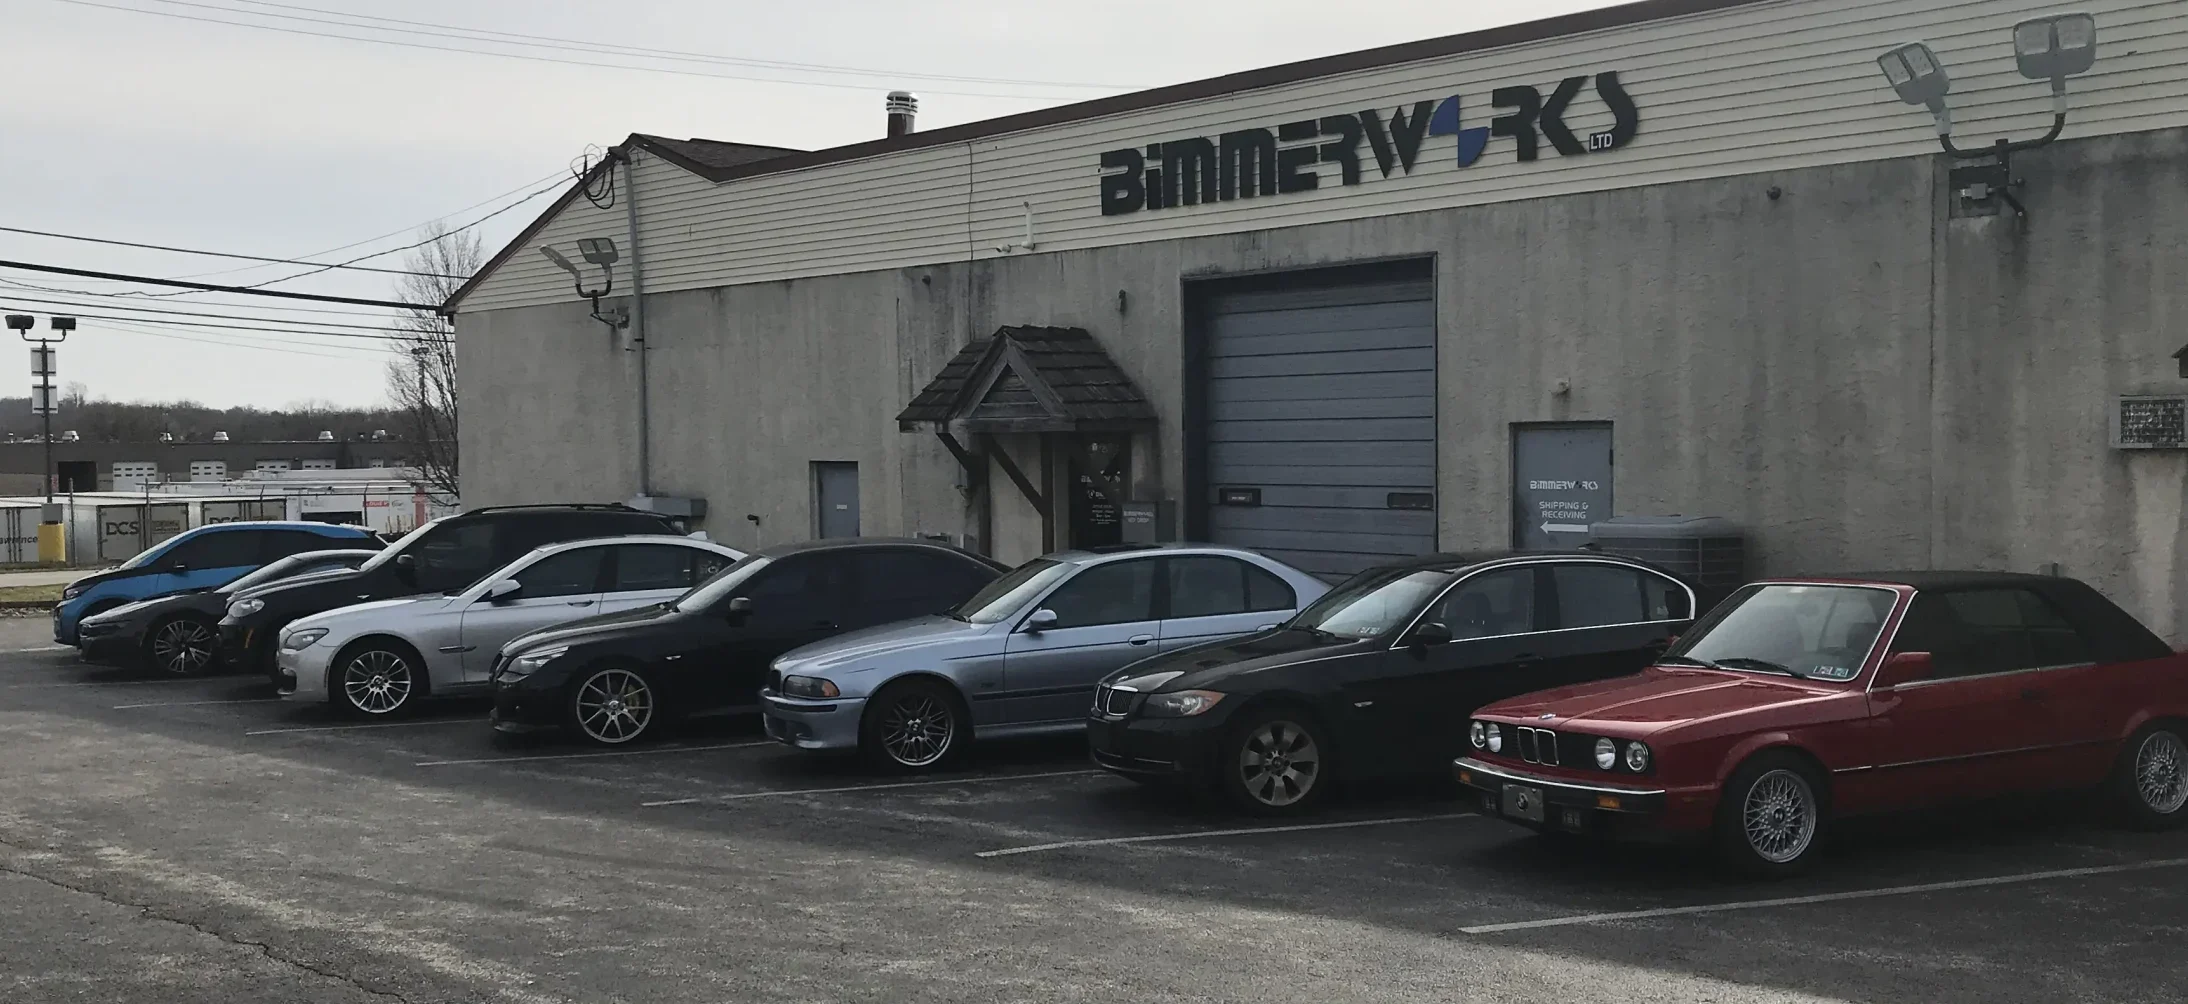 BMWs in front of Bimmerworks